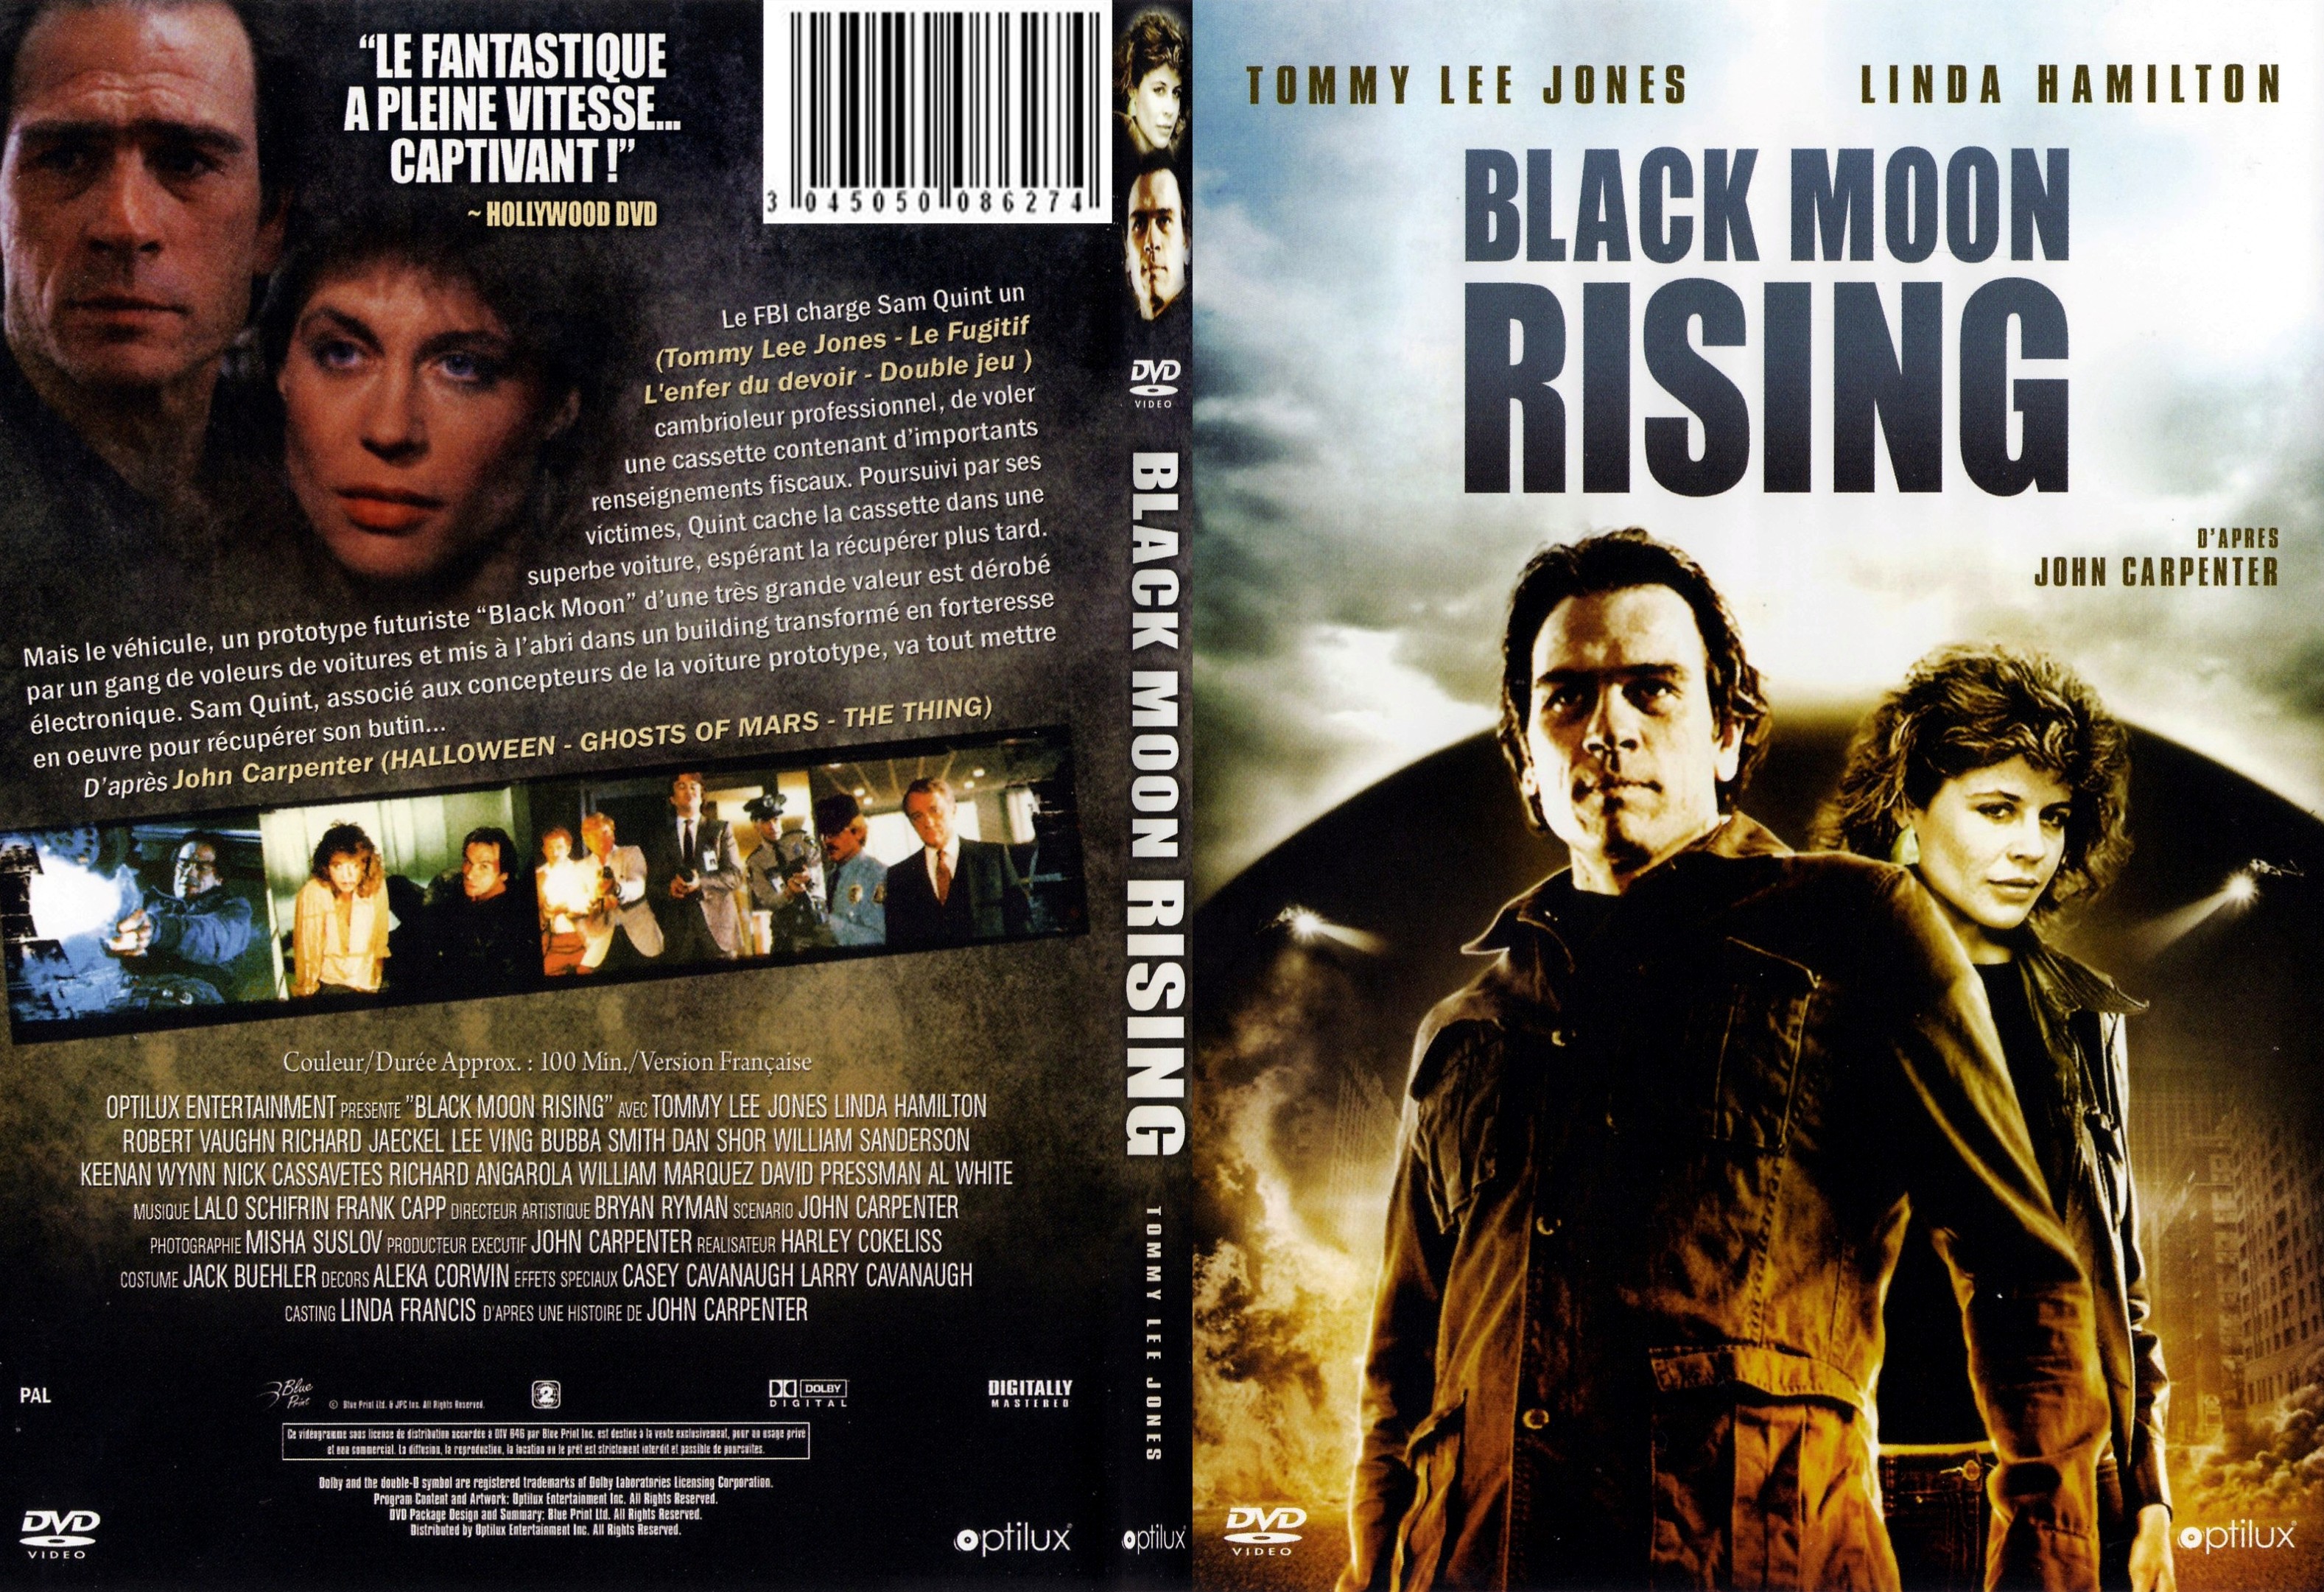 Jaquette DVD Black moon rising - SLIM